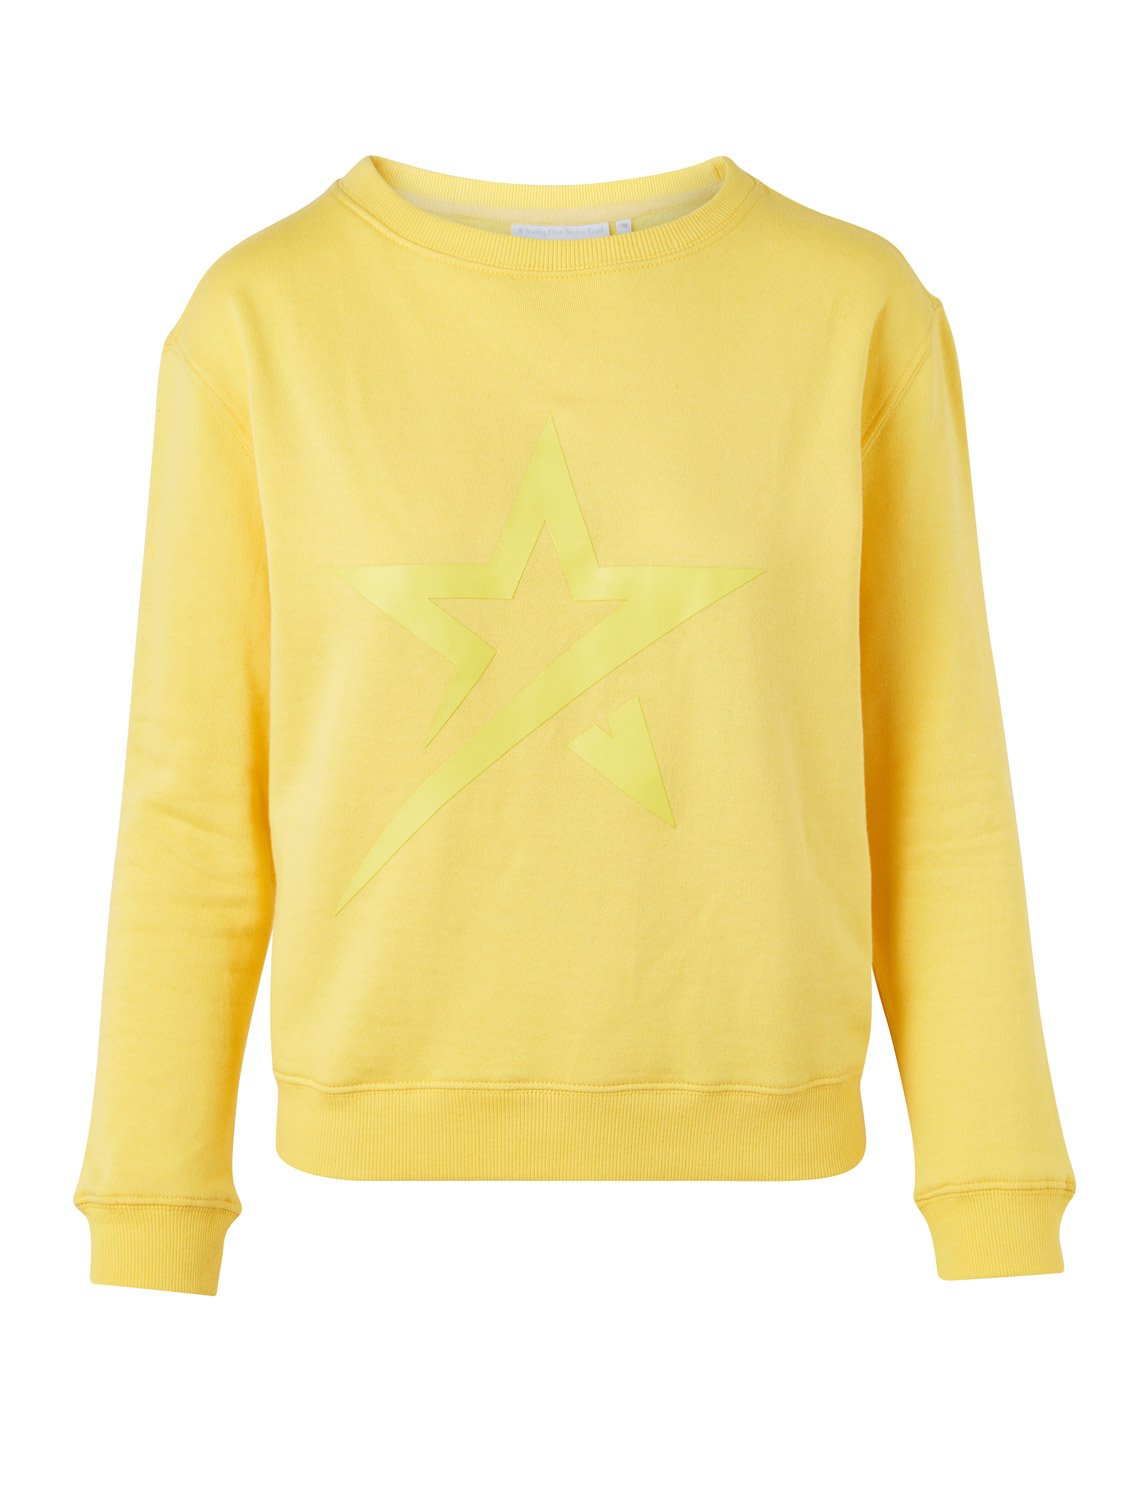 Swing Out Sister Gaia Sweatshirt - Lemon